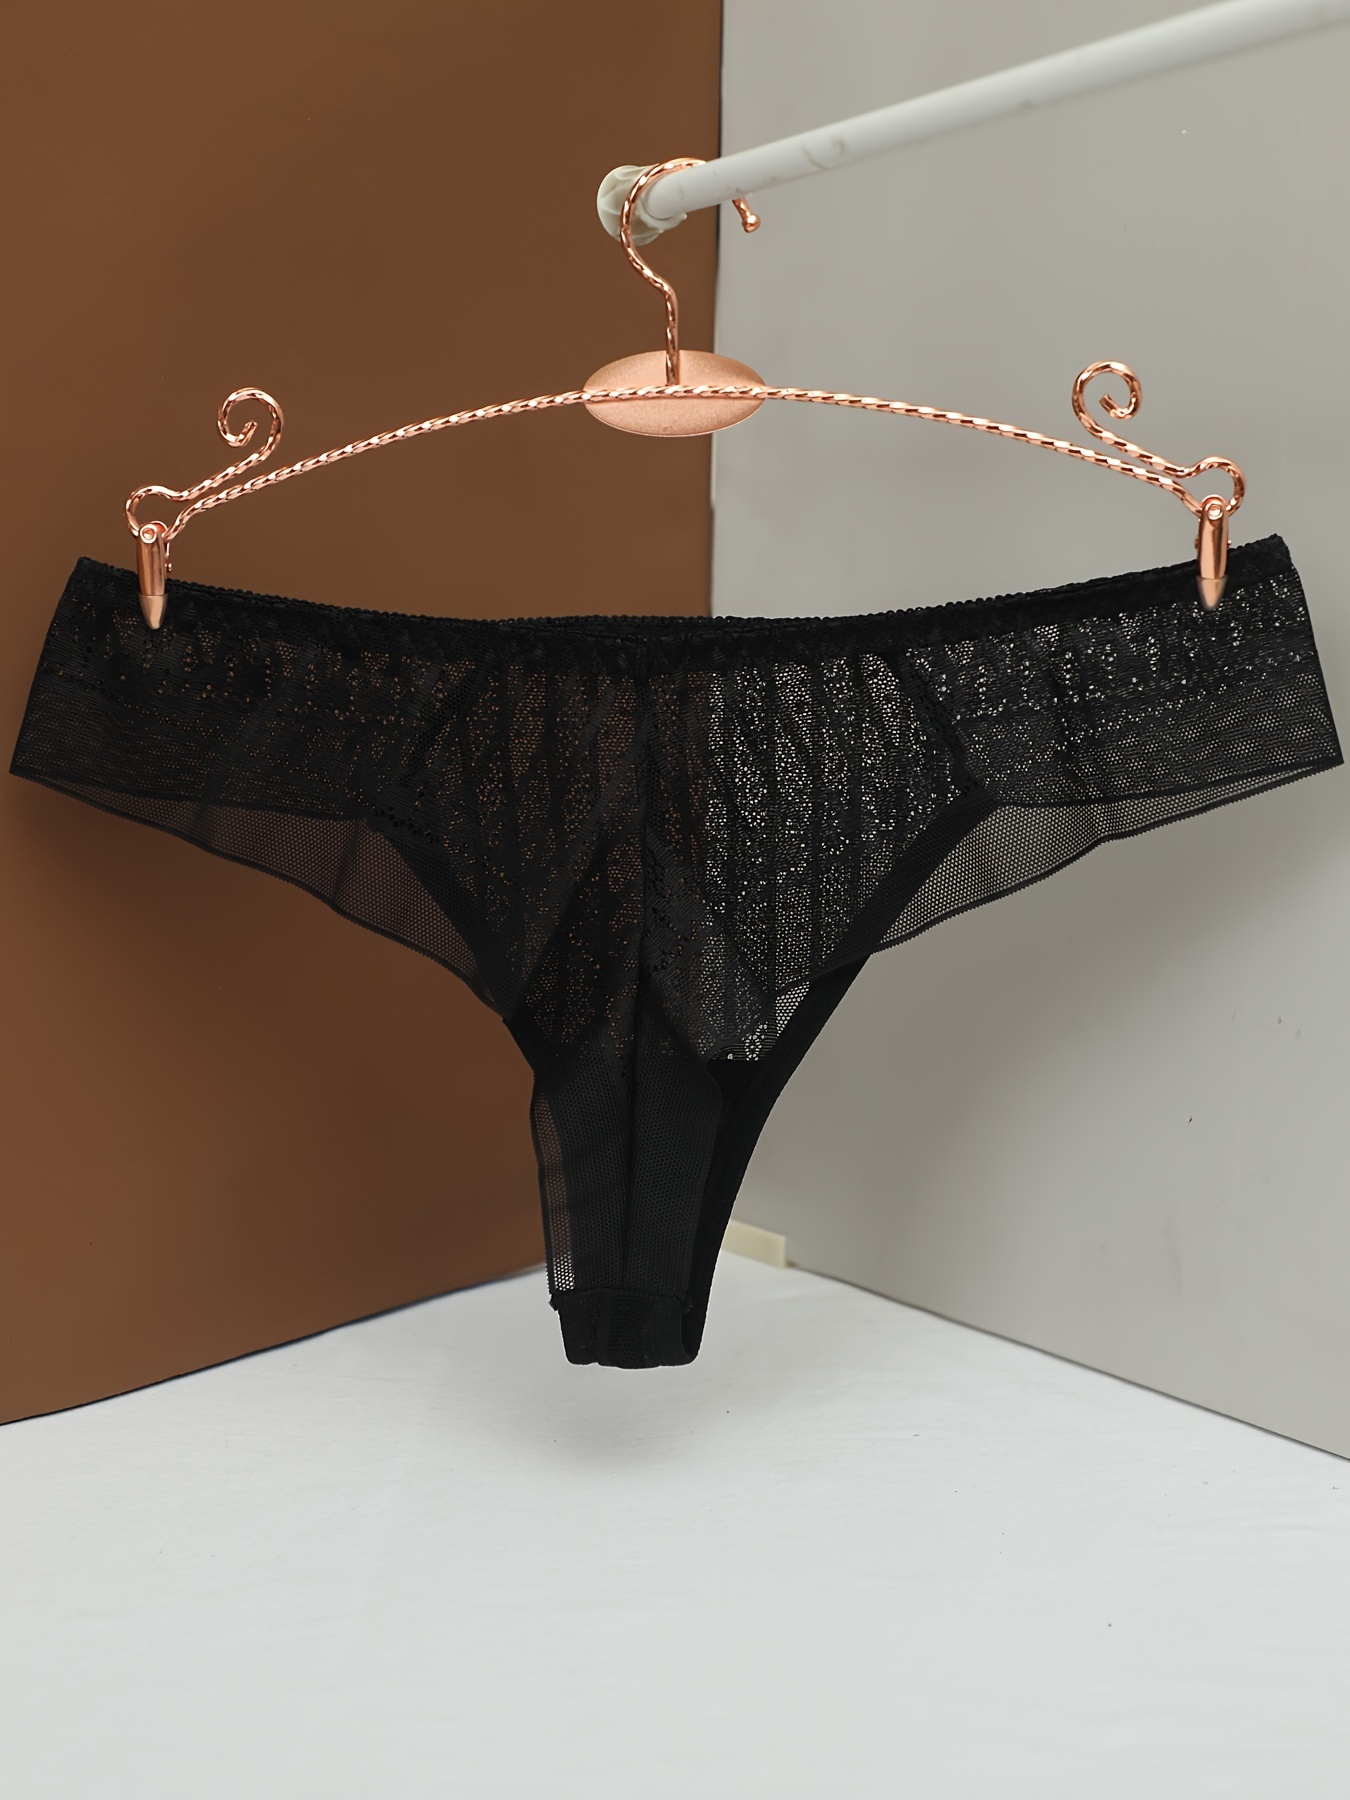 1PCS Women Erotic Transparent Mesh Lingerie Sleepwear Top g-strings Thongs